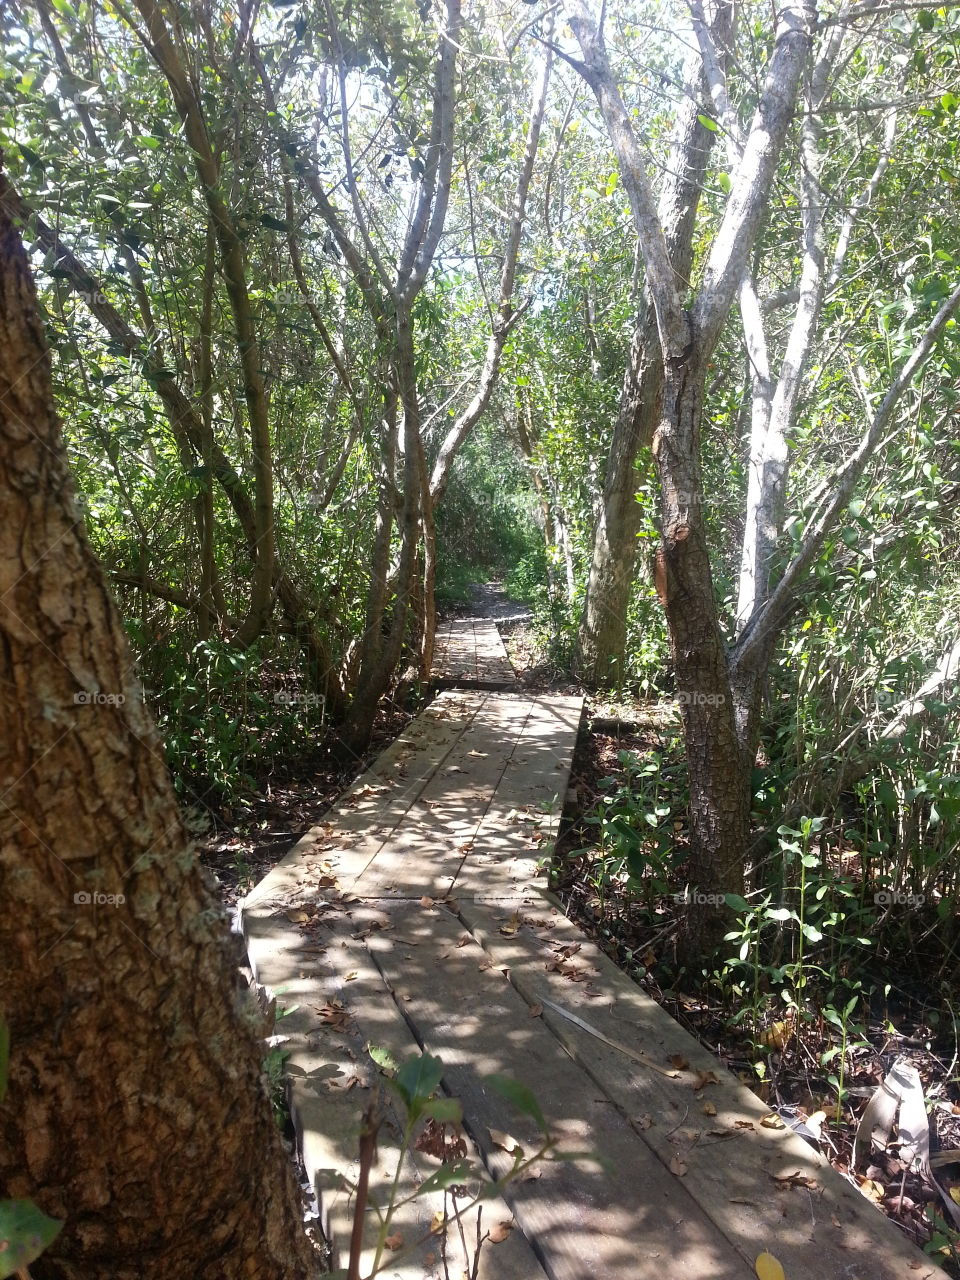 A nice nature walk through Melbourne Florida!